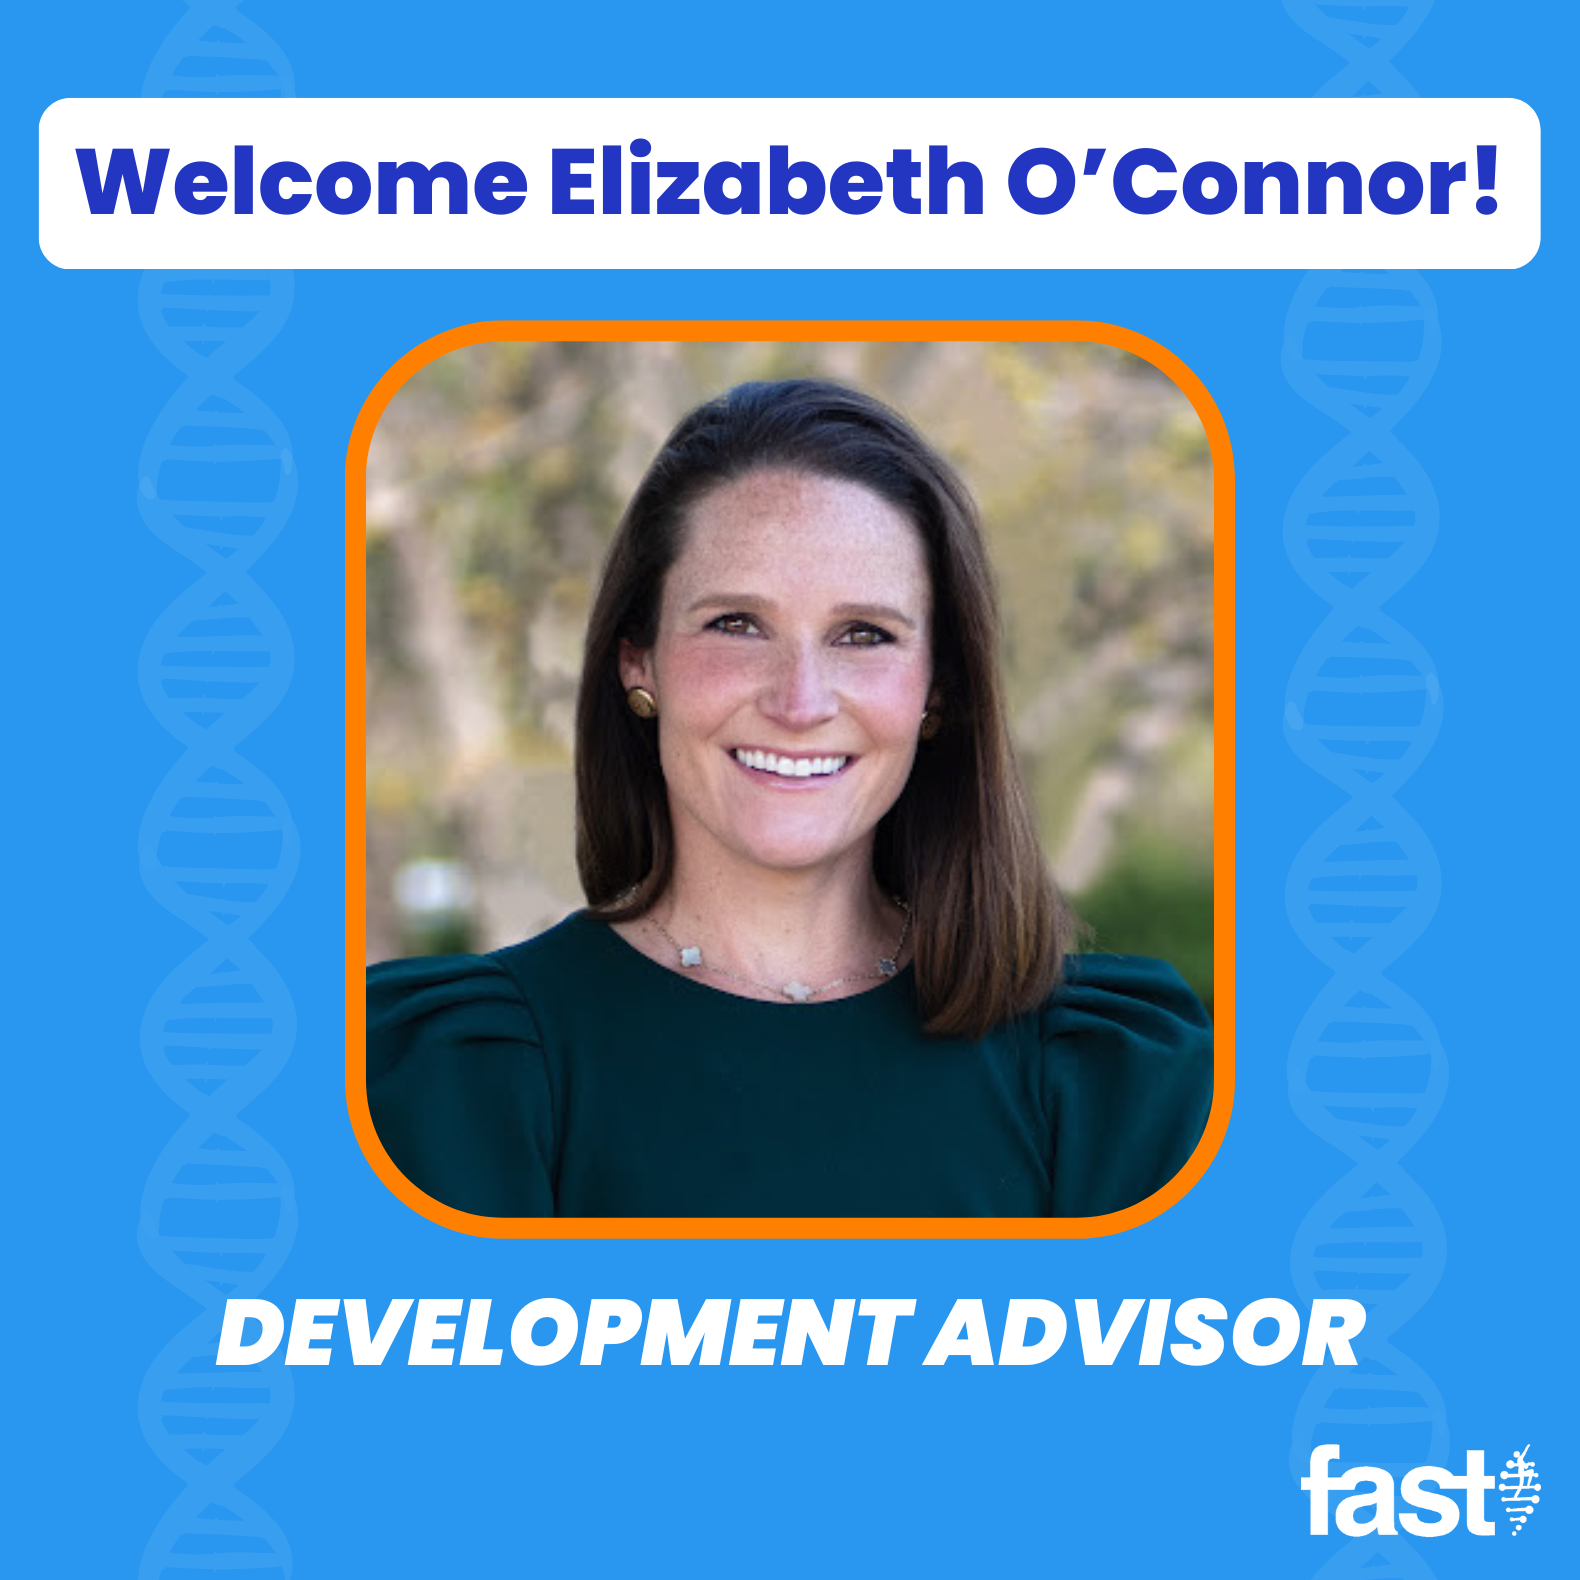 Welcome Elizabeth O’Connor! Development Advisor, with a photo of Elizabeth